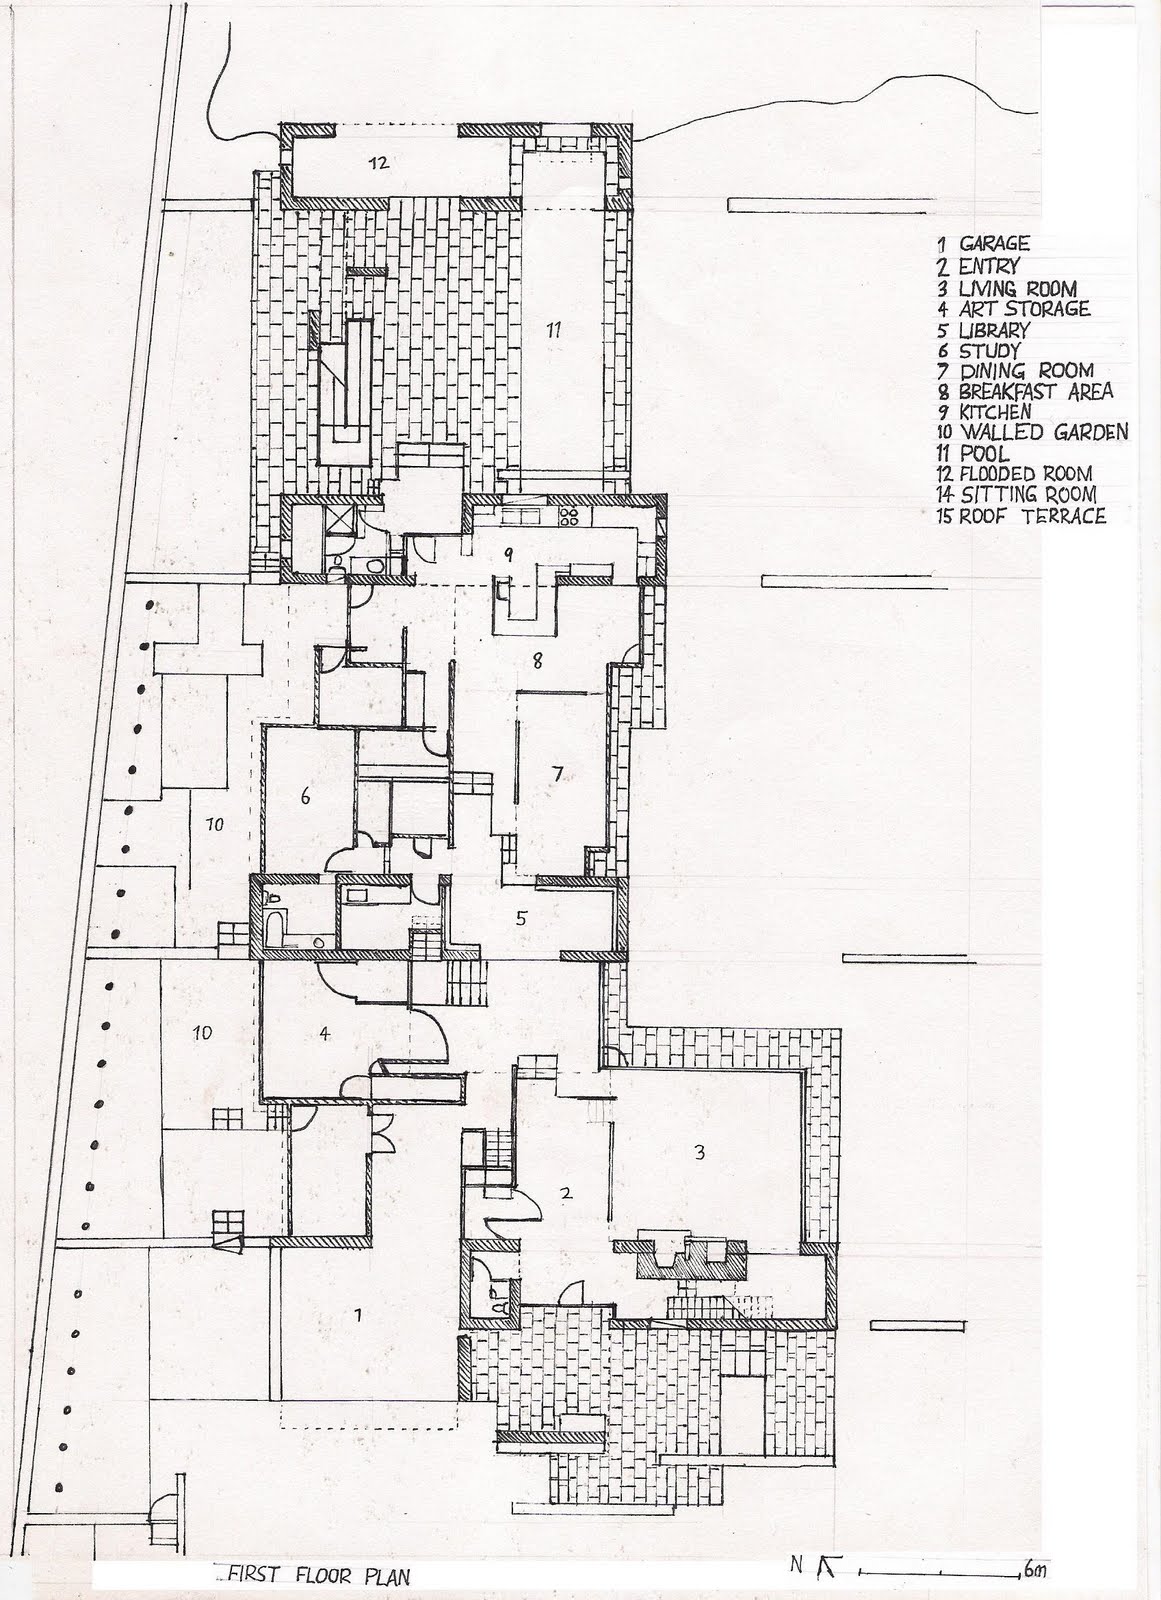 DAB310: the architectural apprenticeship: Floor Plans